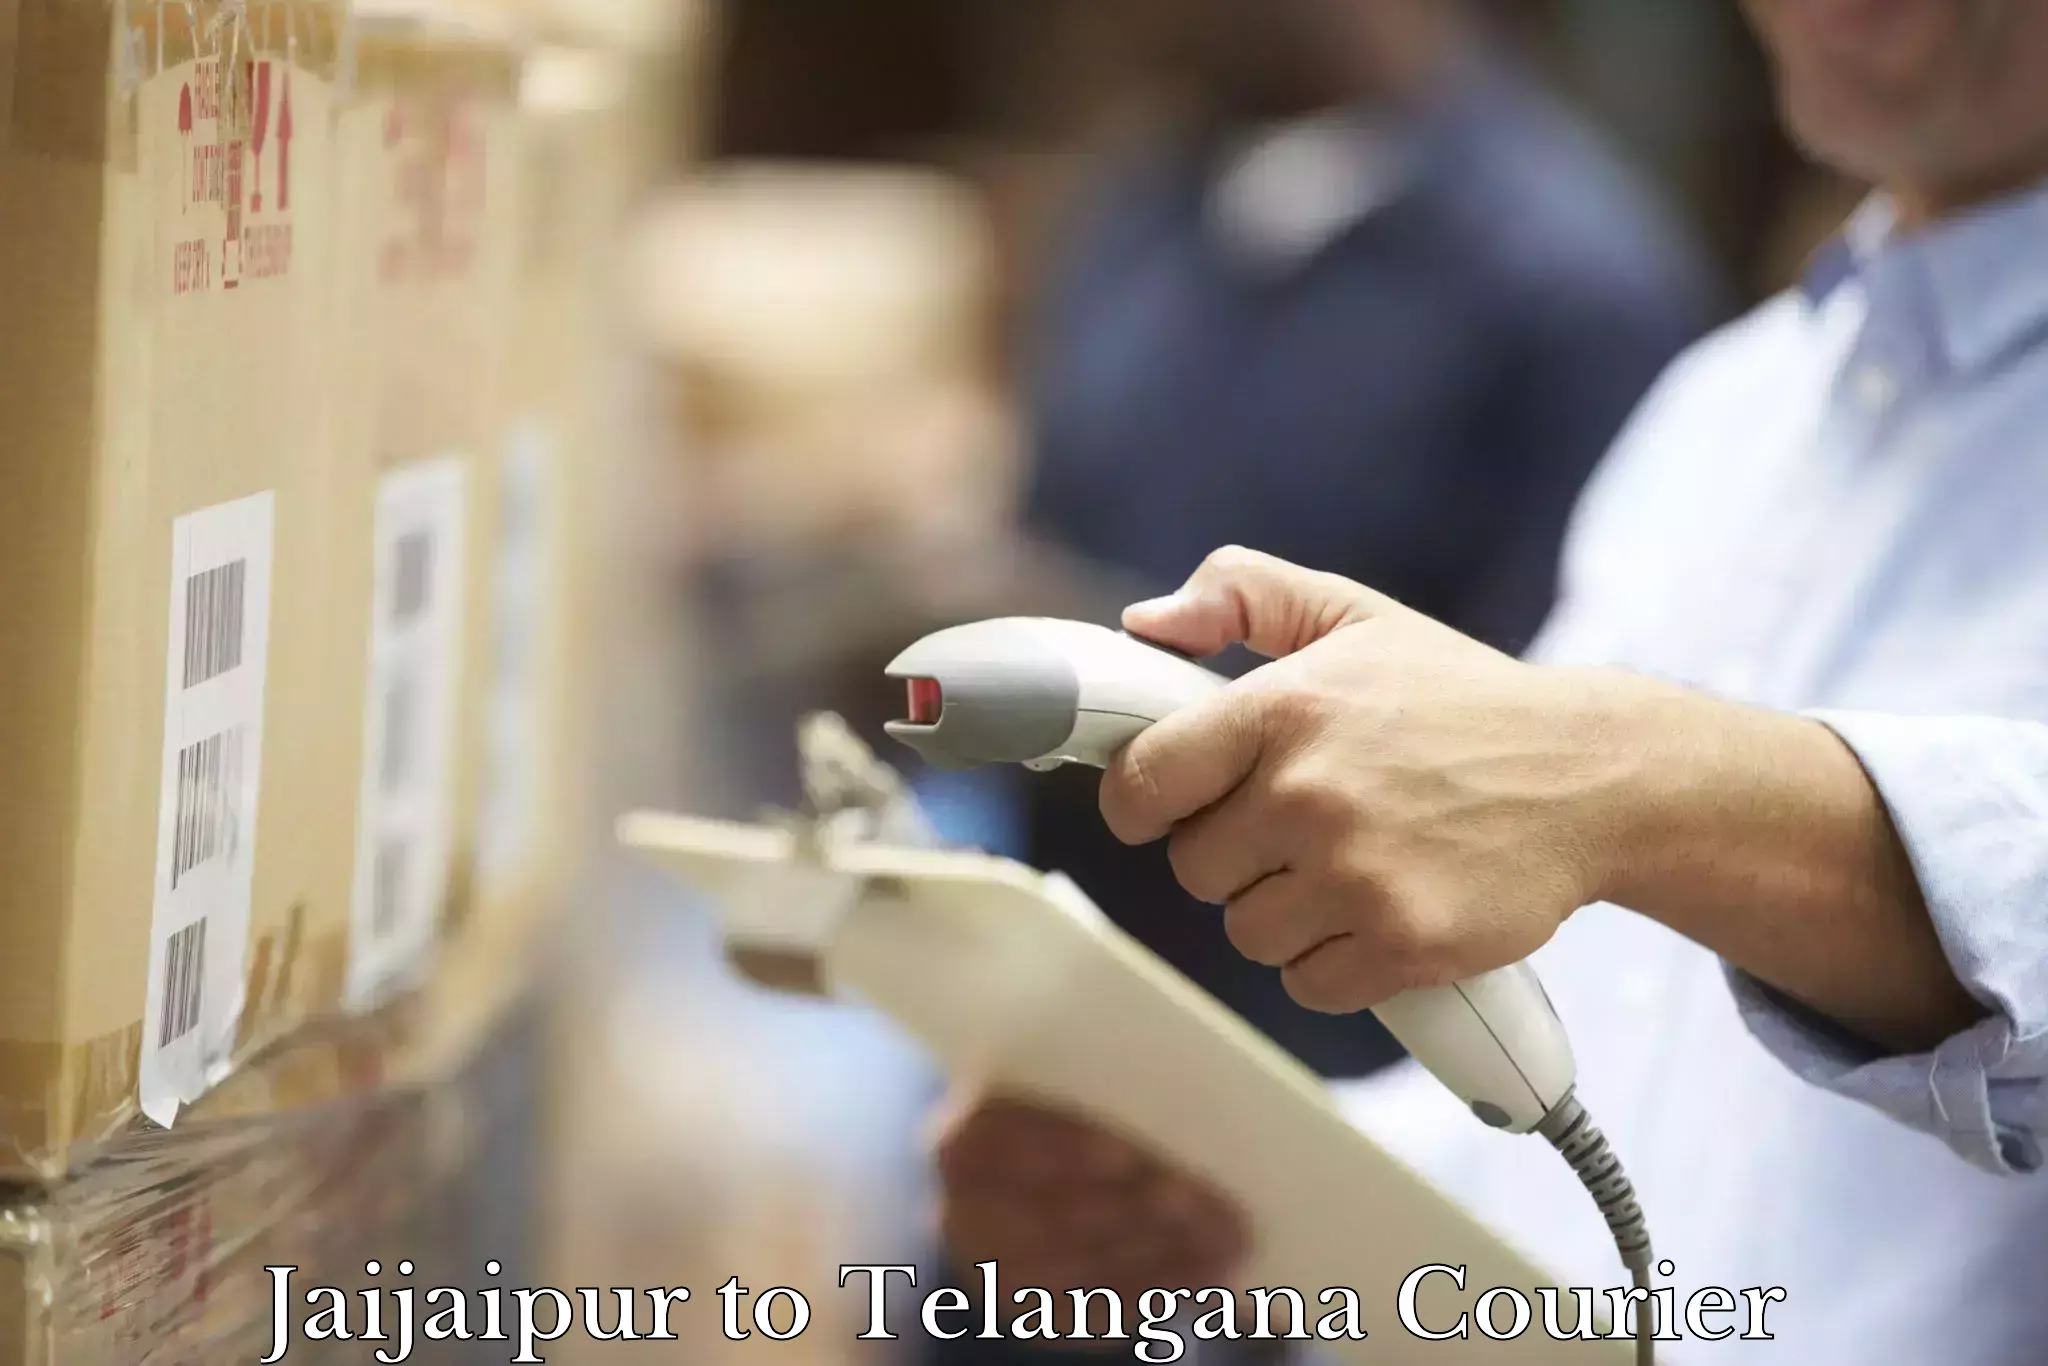 Courier service innovation Jaijaipur to Hyderabad